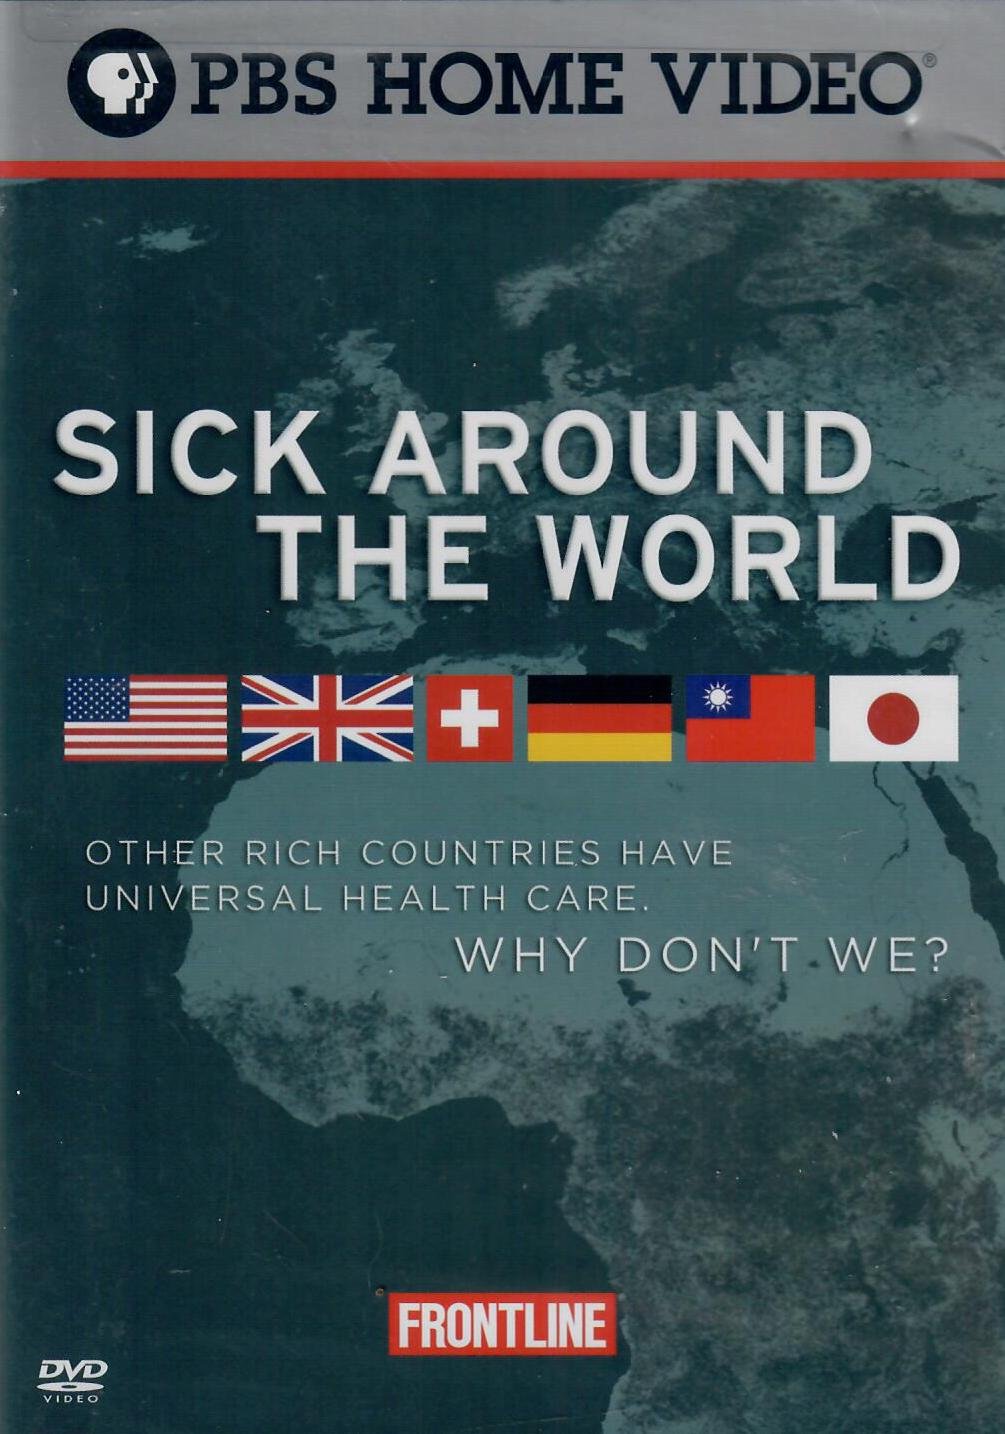 Frontline" Sick Around the World"